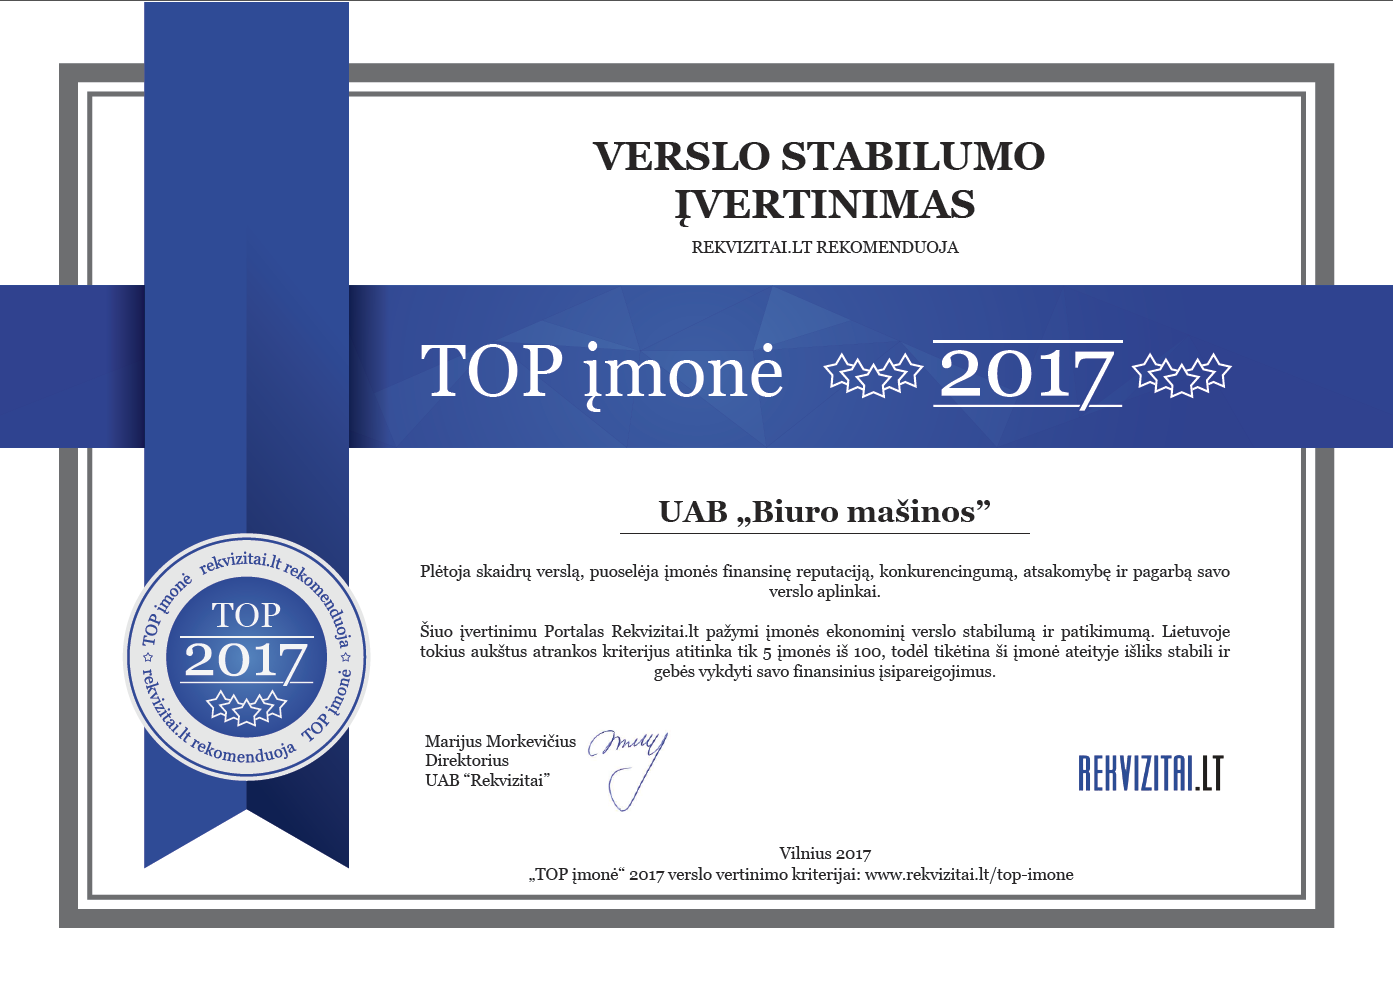 Biuro masinos TOP imone 2017